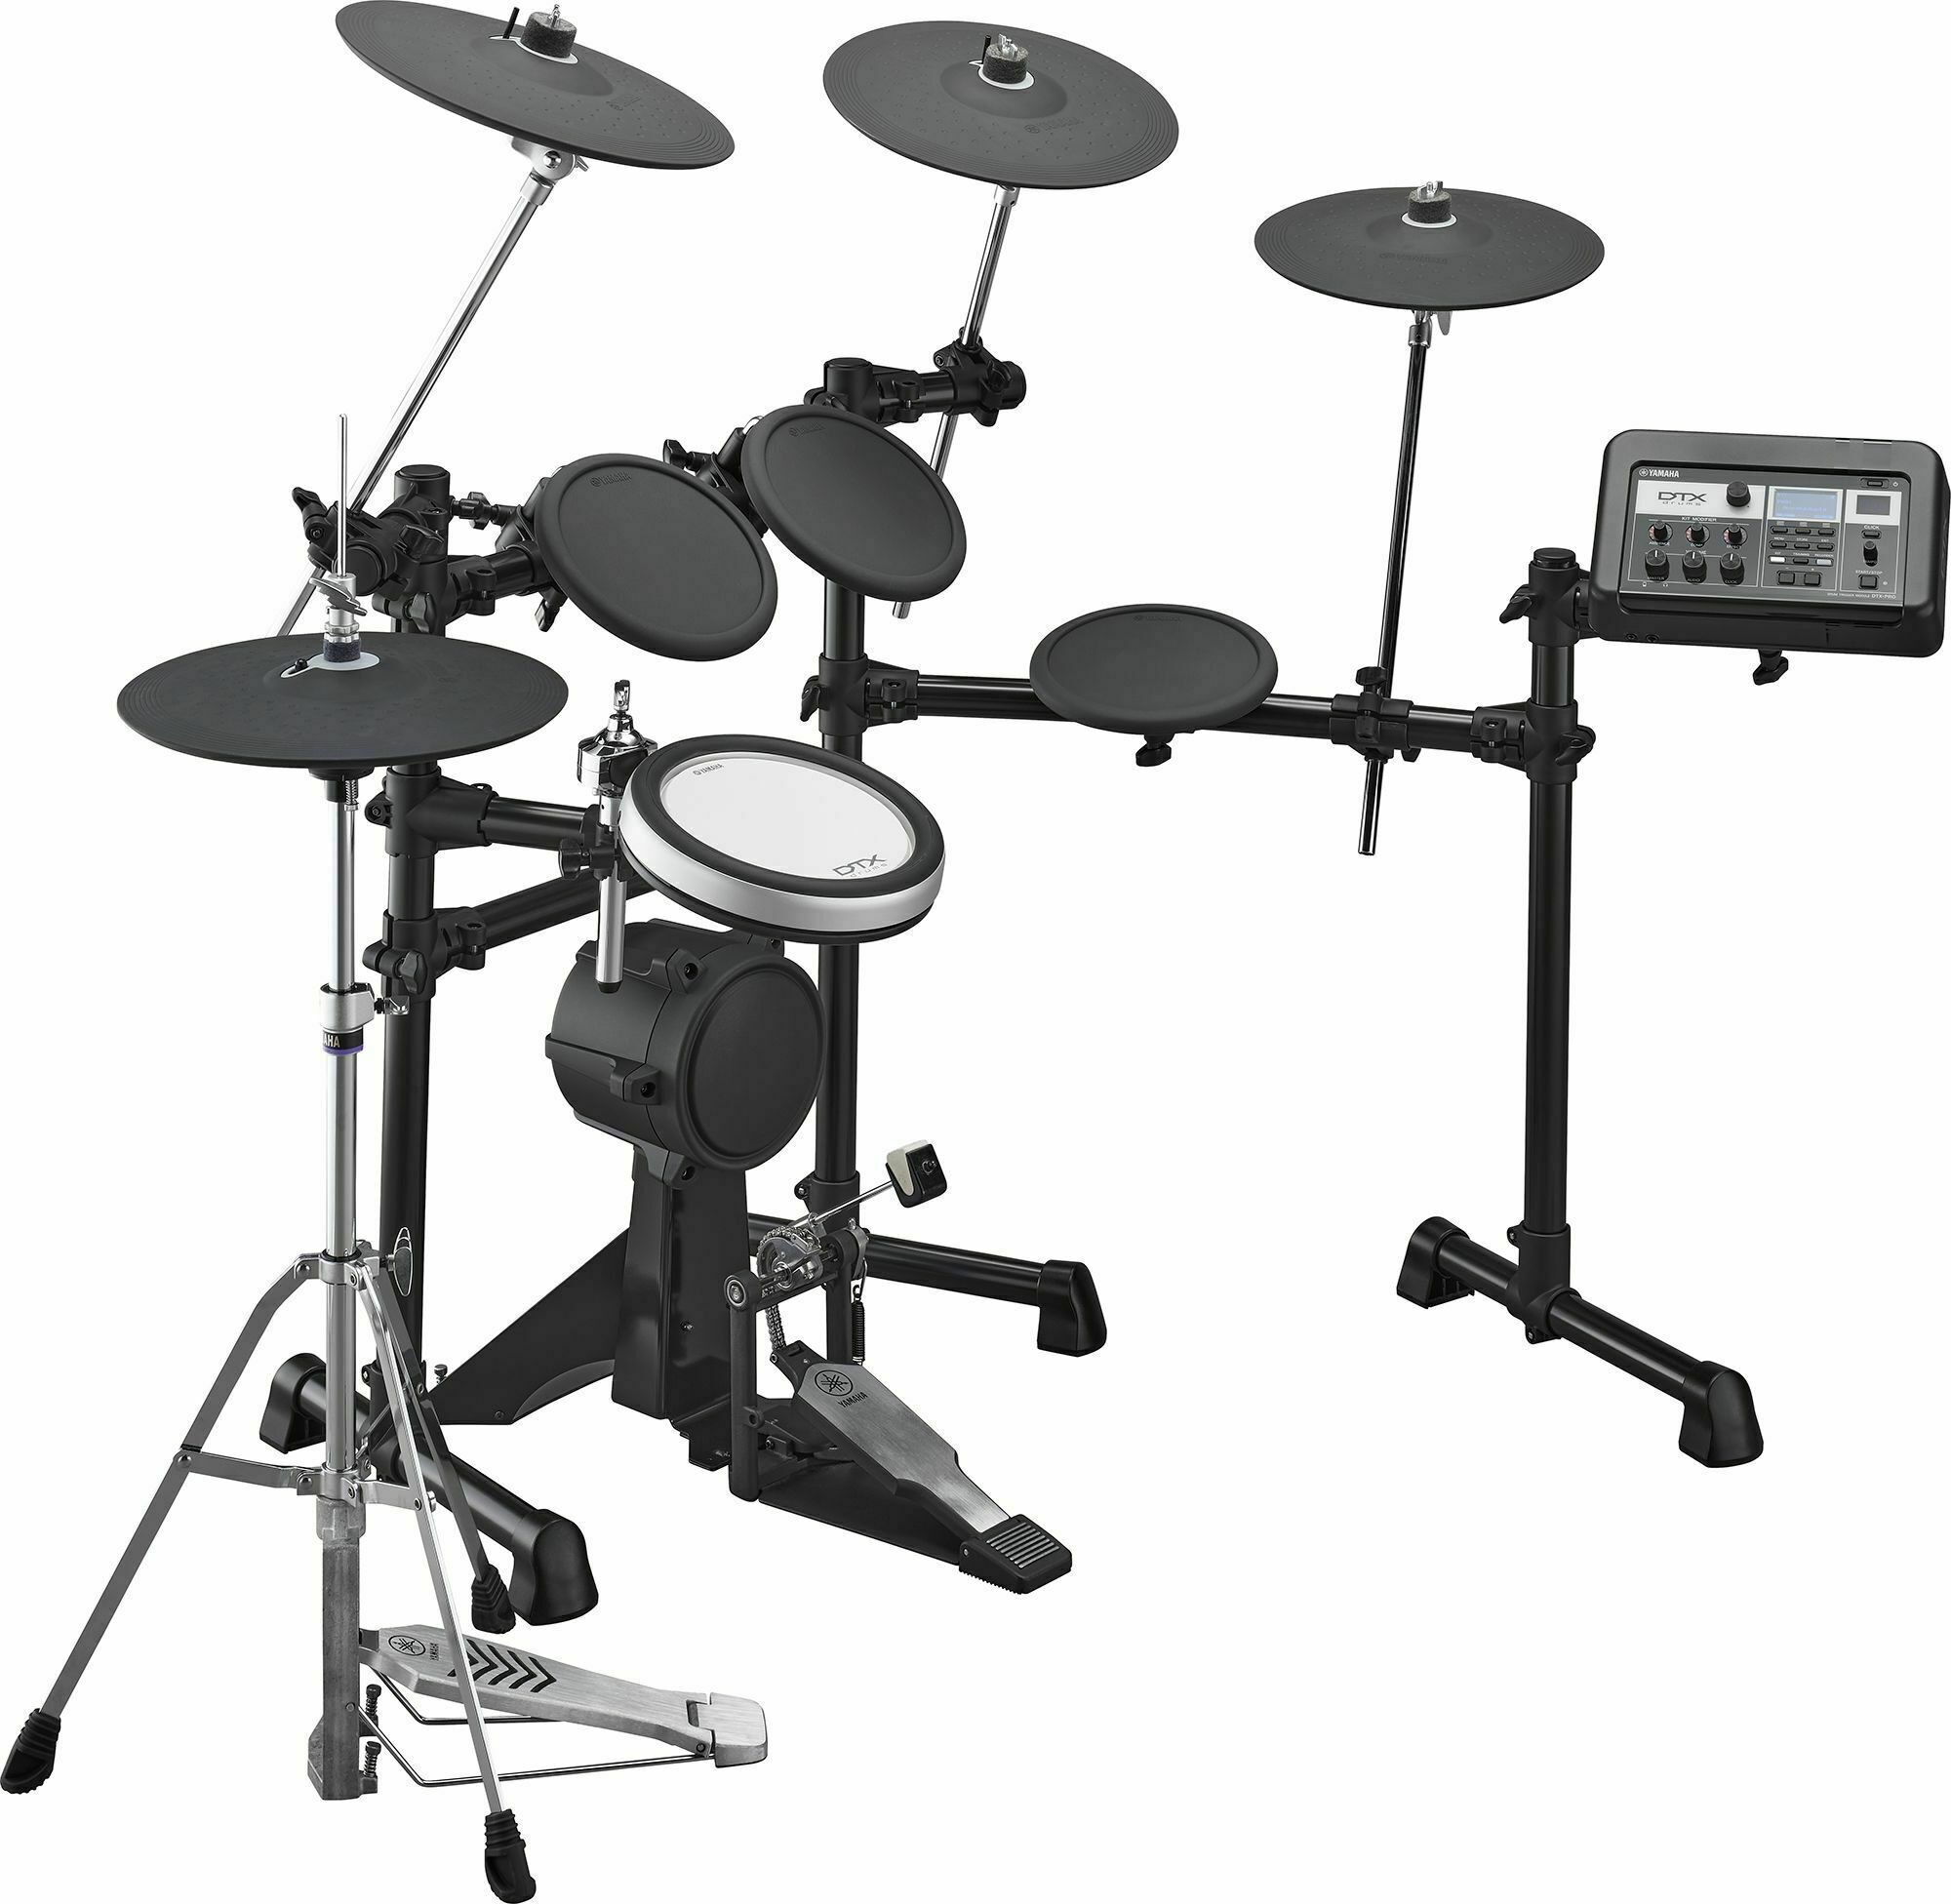 DTX6 Electronic Drum Set () in Black - Yamaha DTX6K2-X